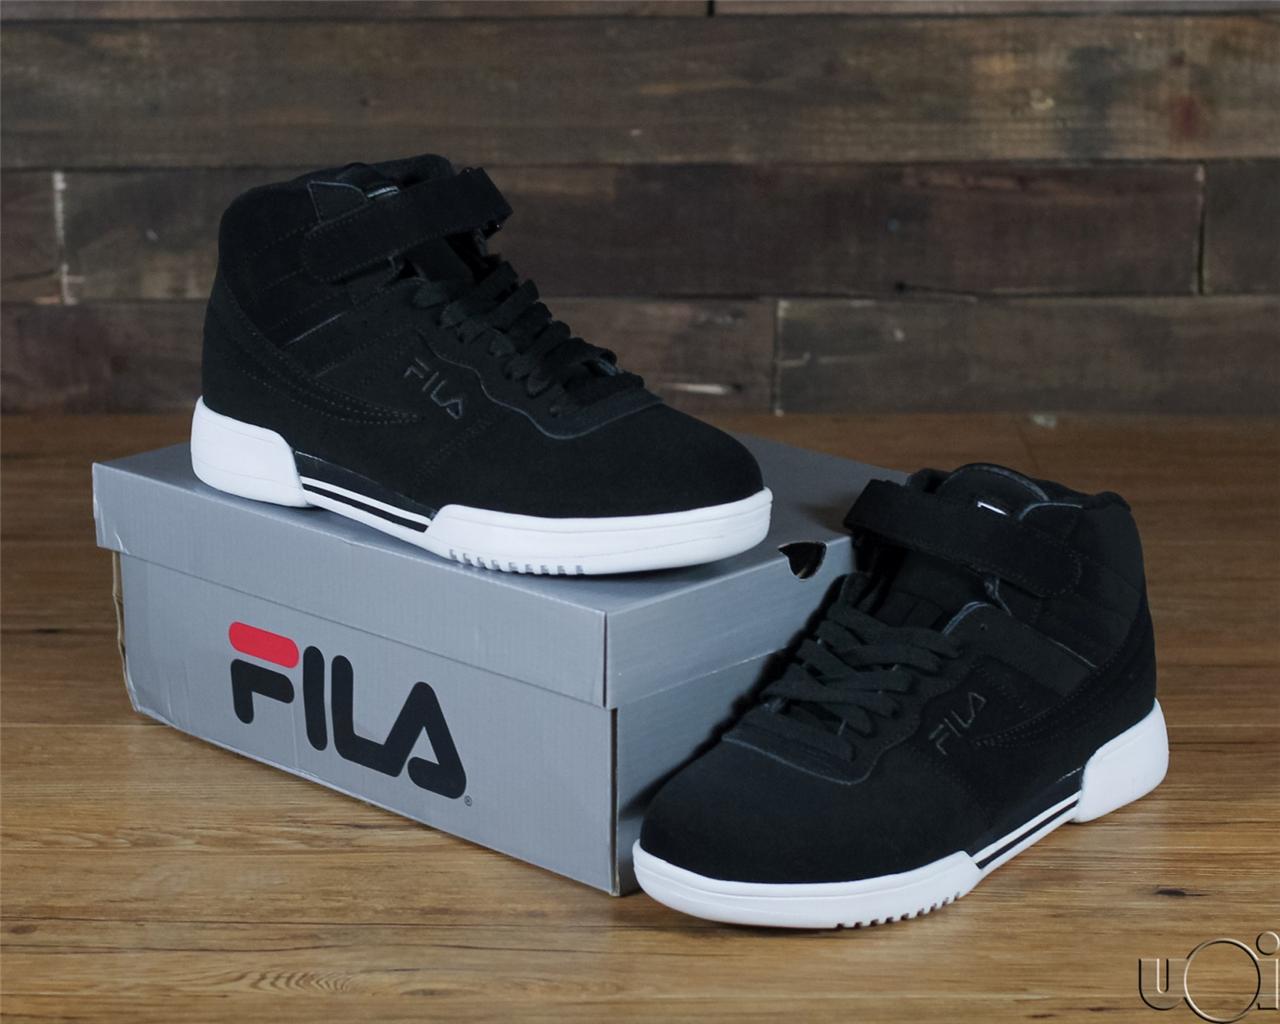 FILA F 13 leather cage hill air basketball shoe 96 BLACK WHITE GRANT JORDAN | eBay